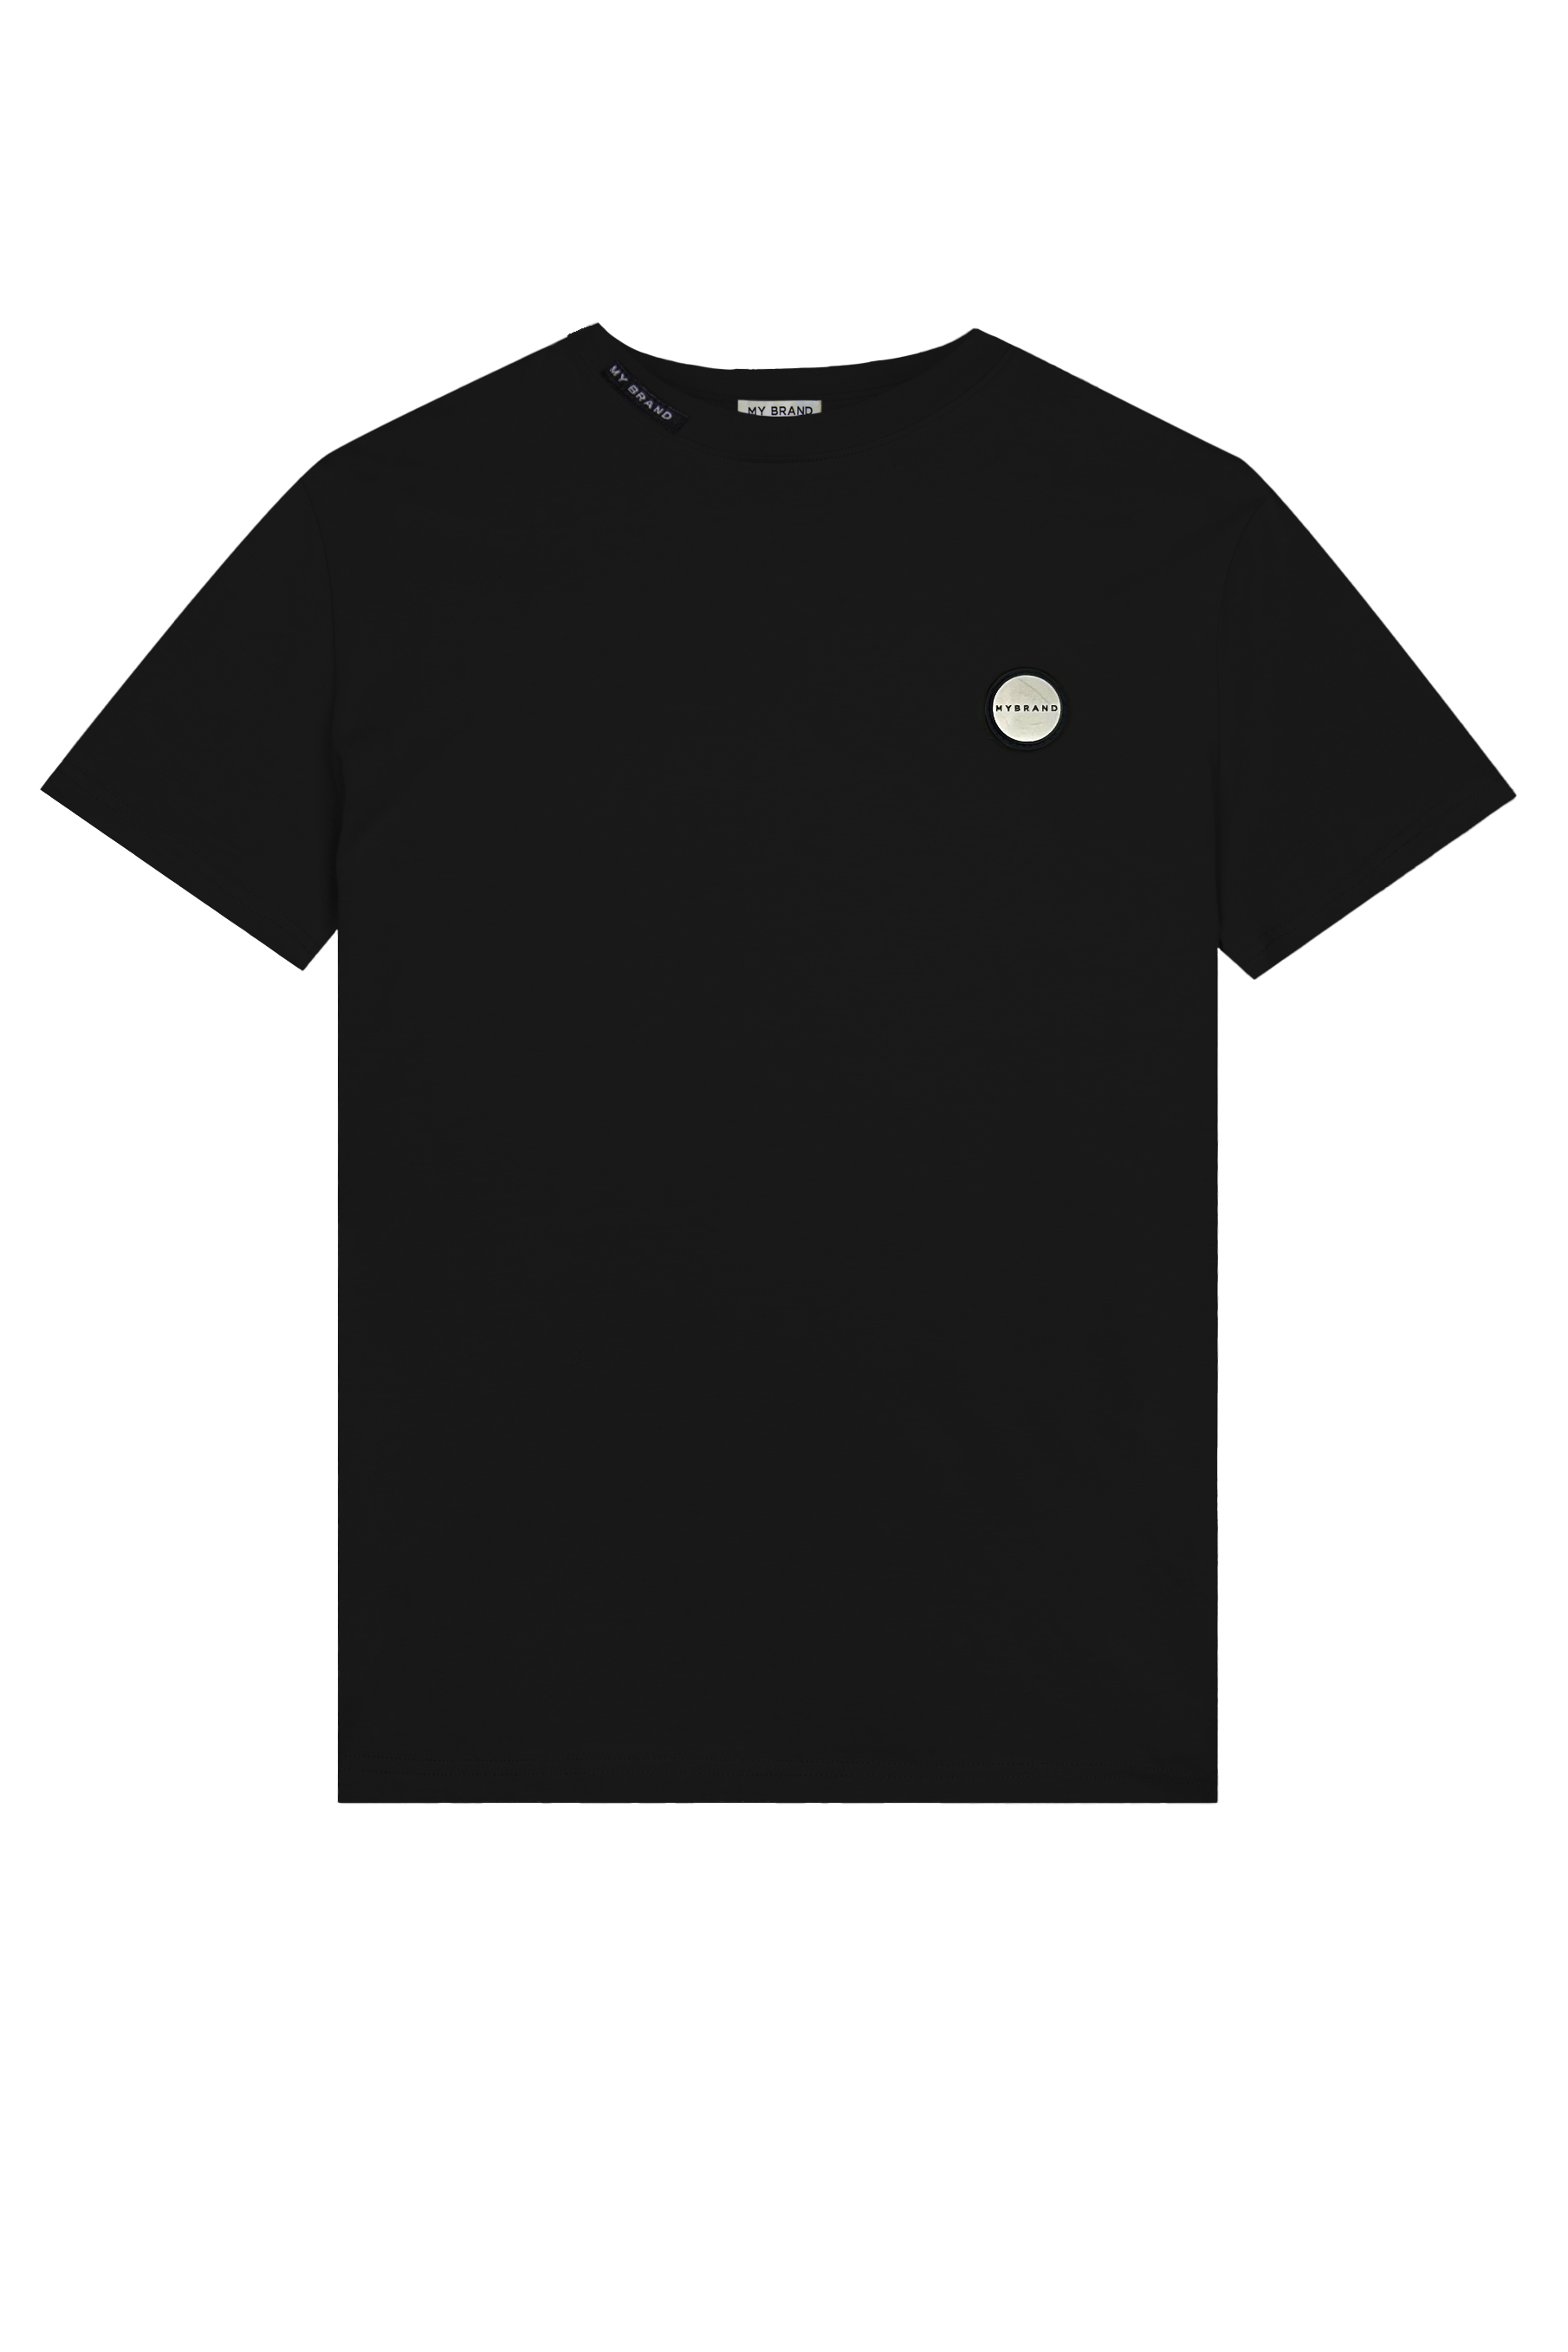 Basic Capsule Black Tshirt